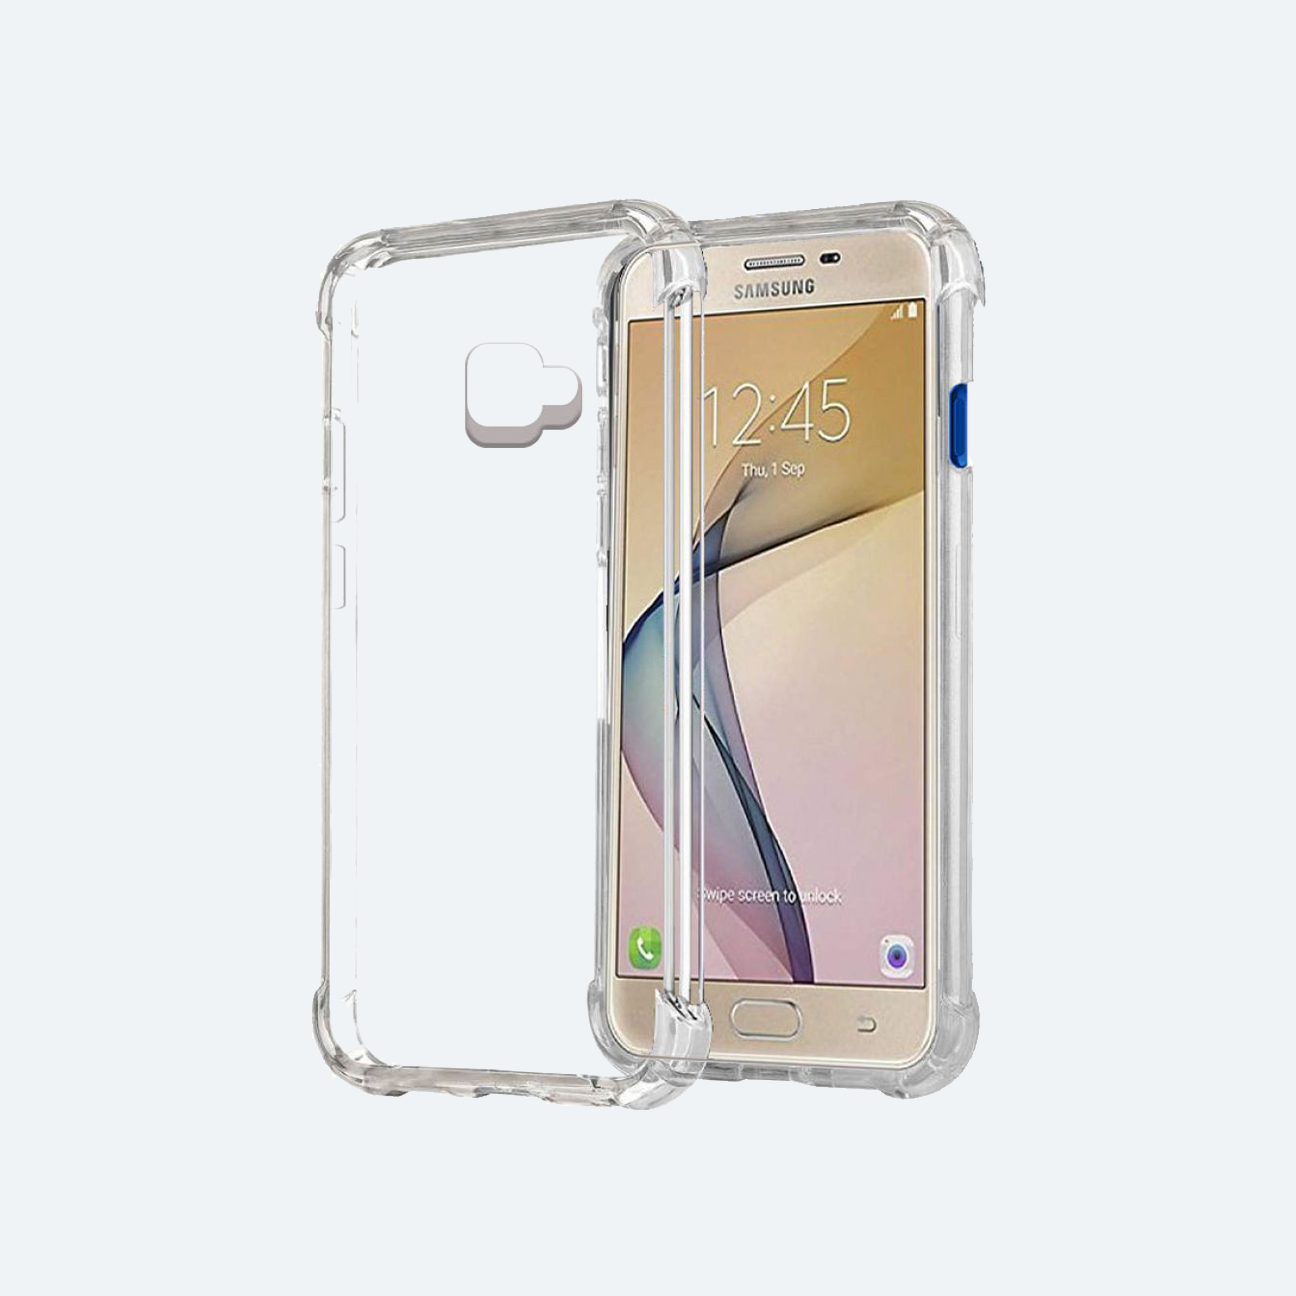 Samsung Galaxy J7 Prime 2 Transparent Back Cover